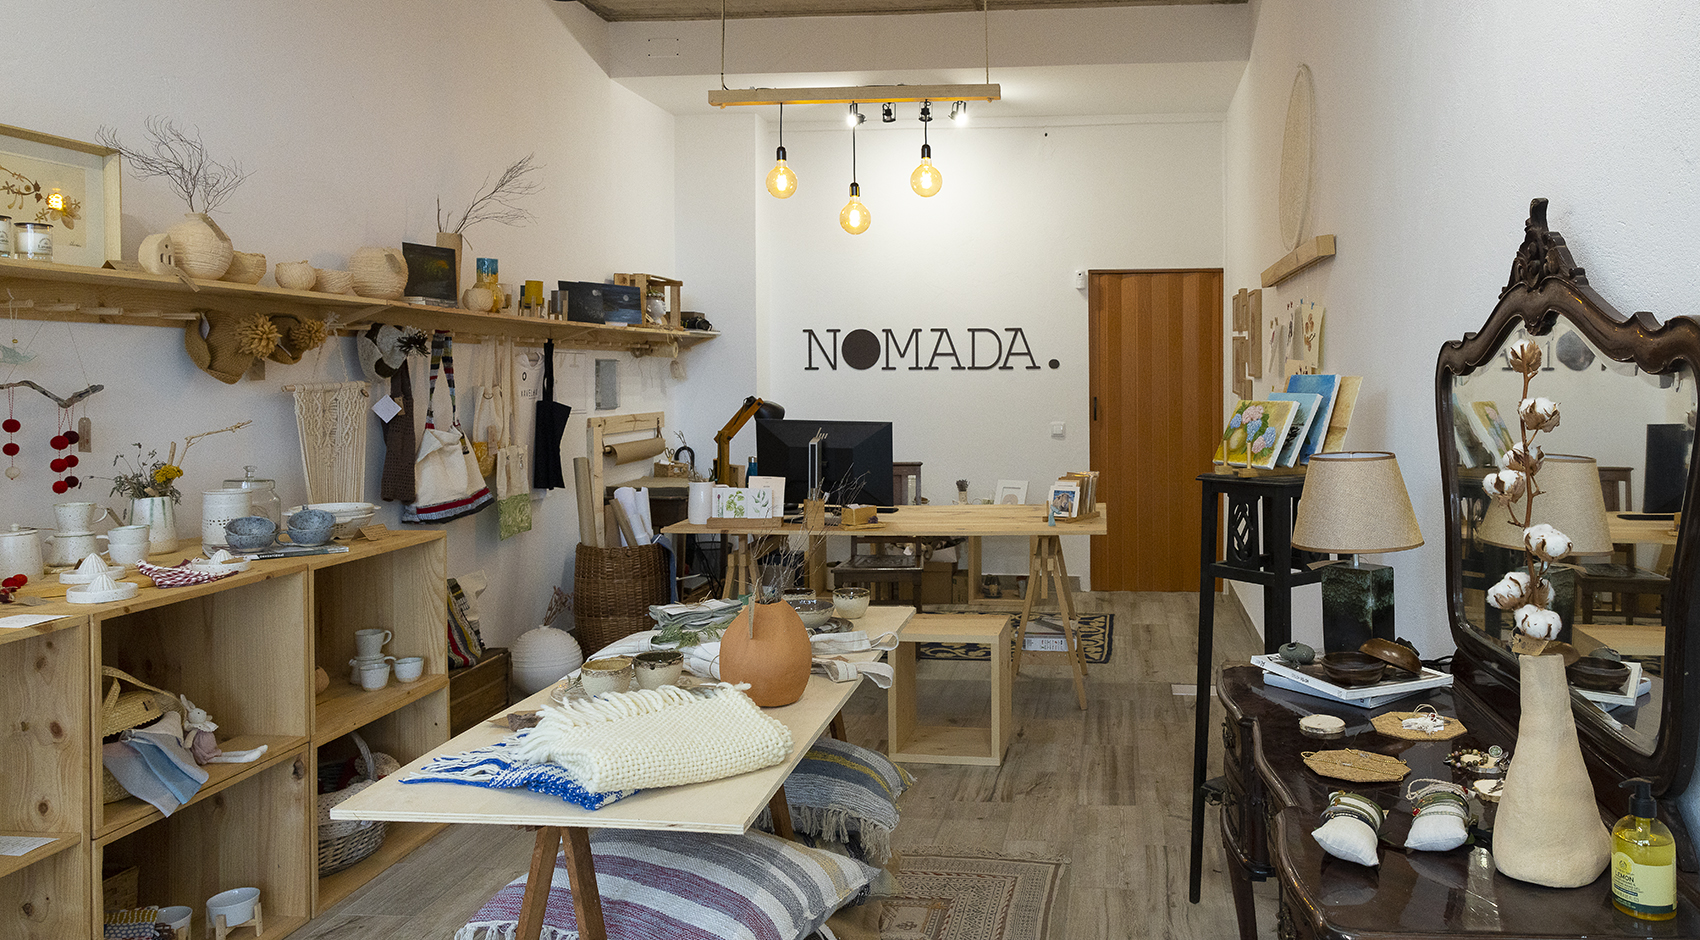 Nómada: the art of creating with calm